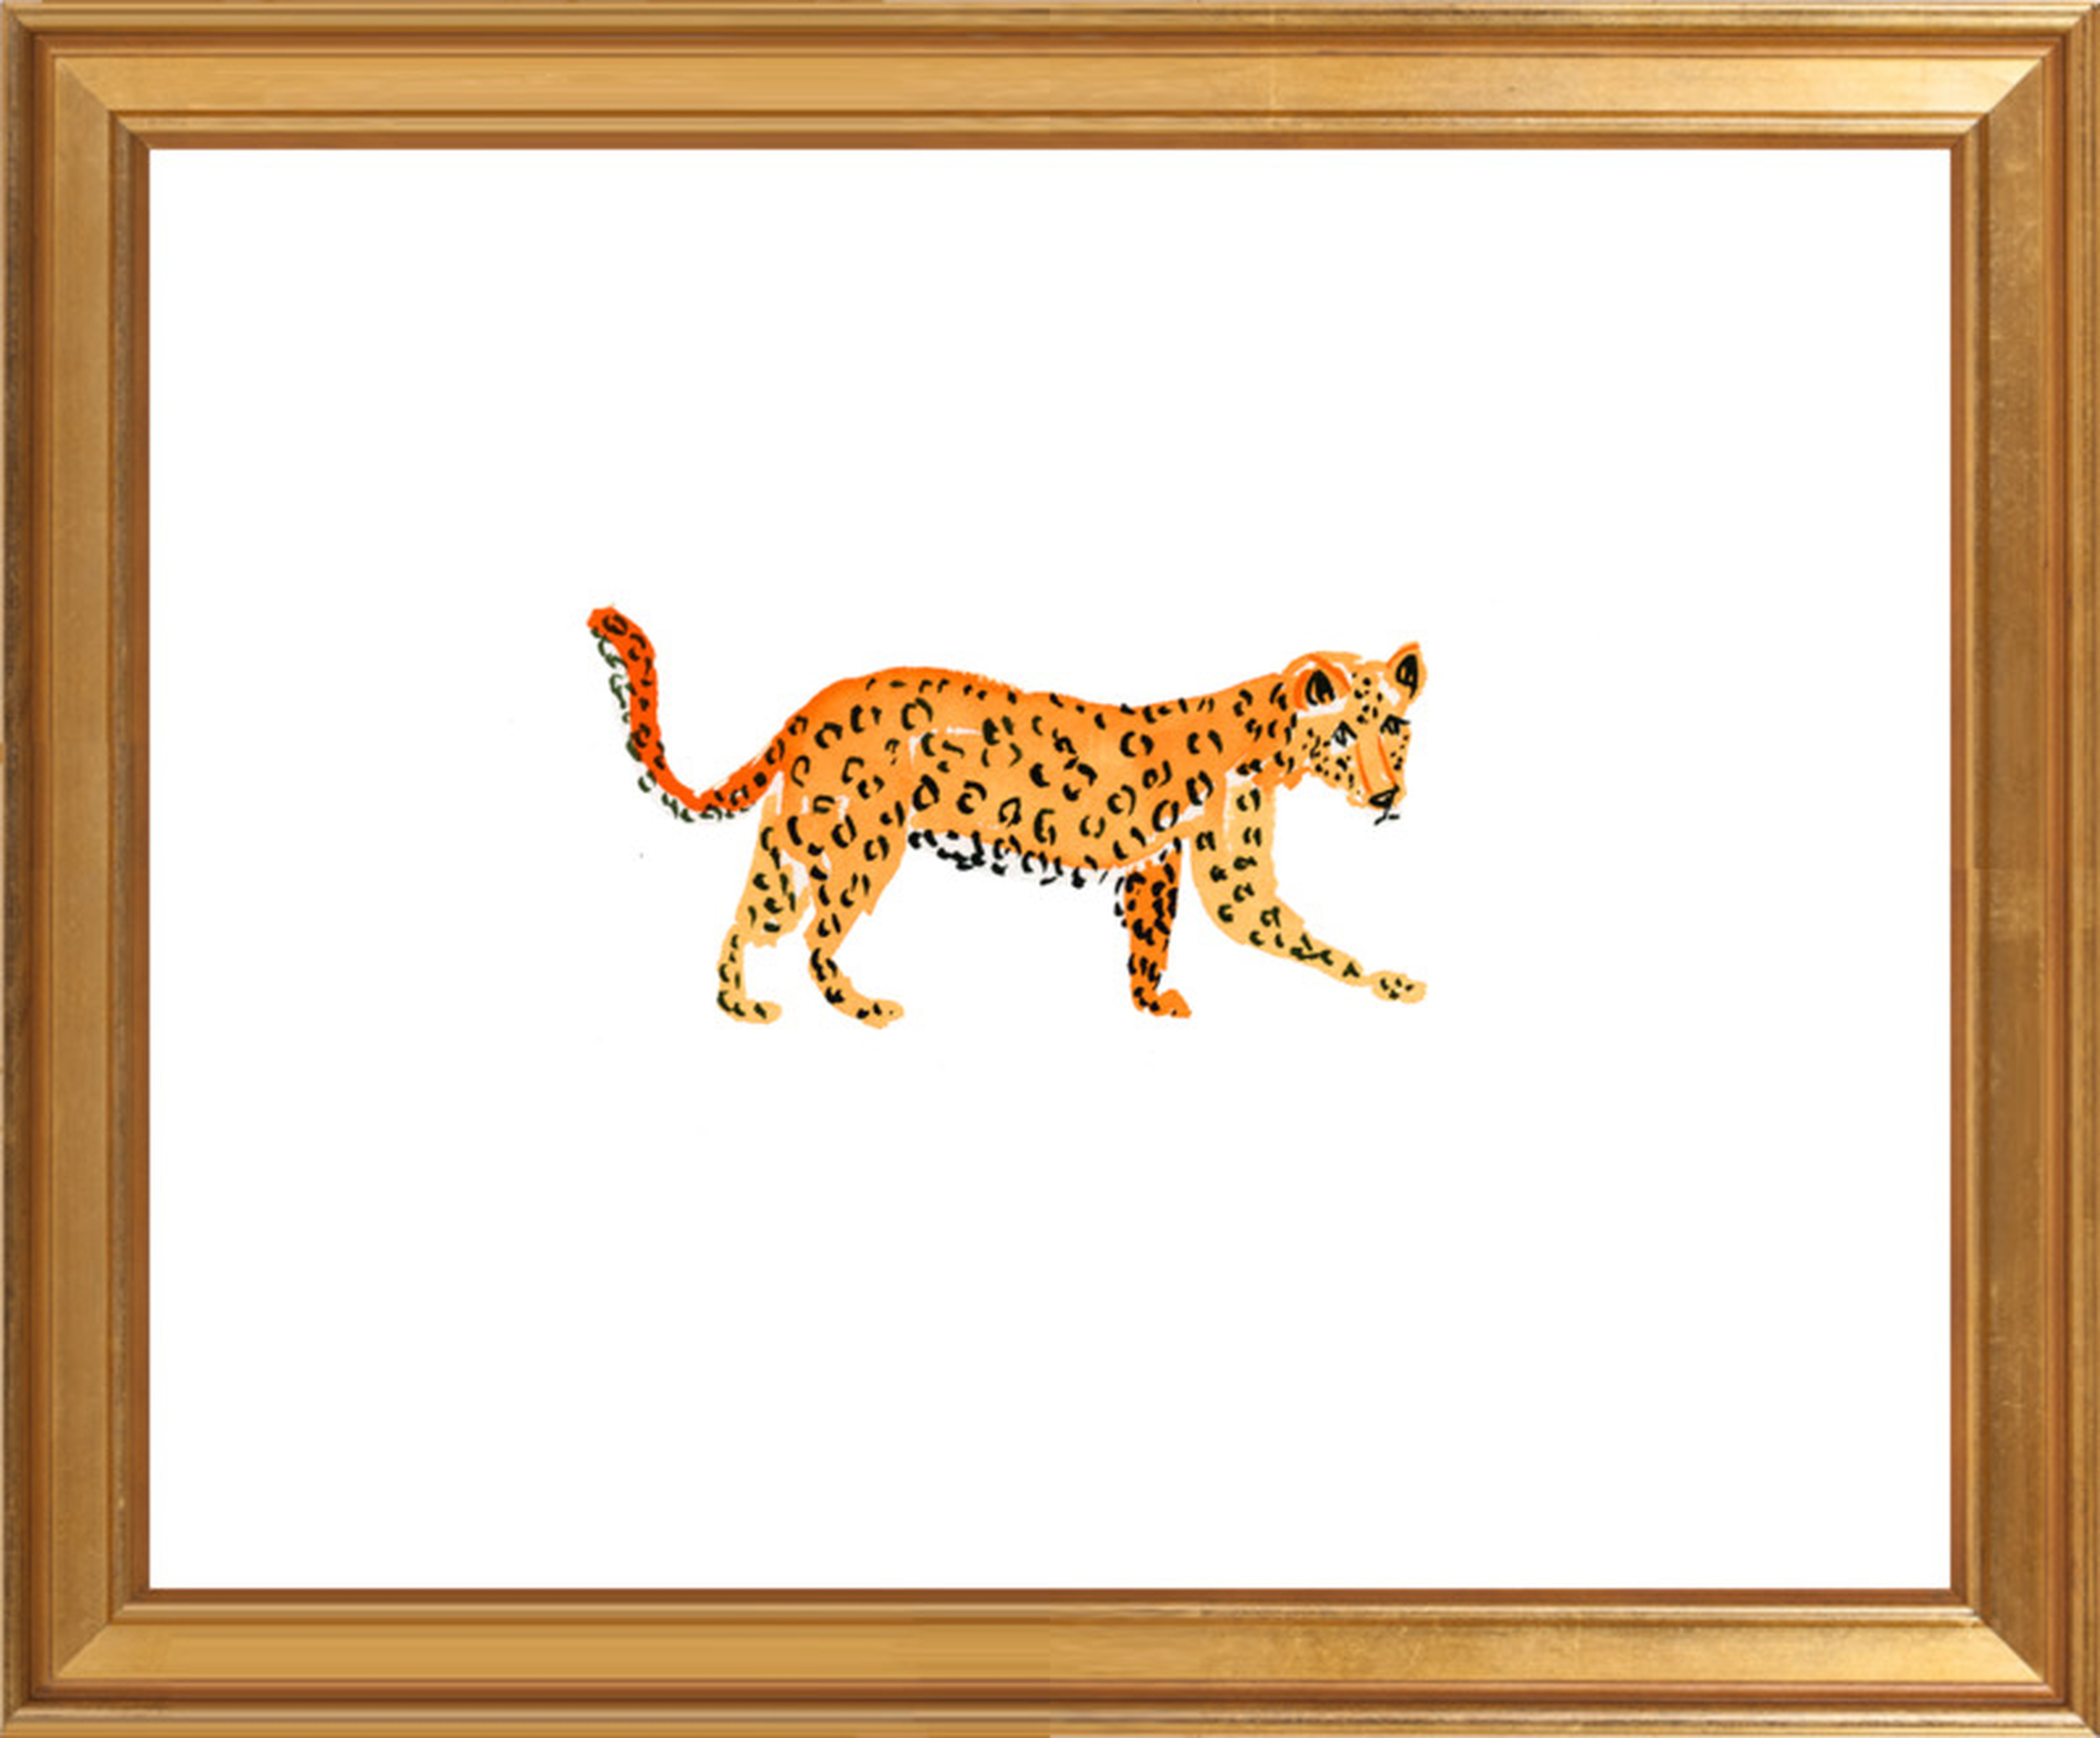 Striding Leopard by Jill Delavan for Artfully Walls - Artfully Walls